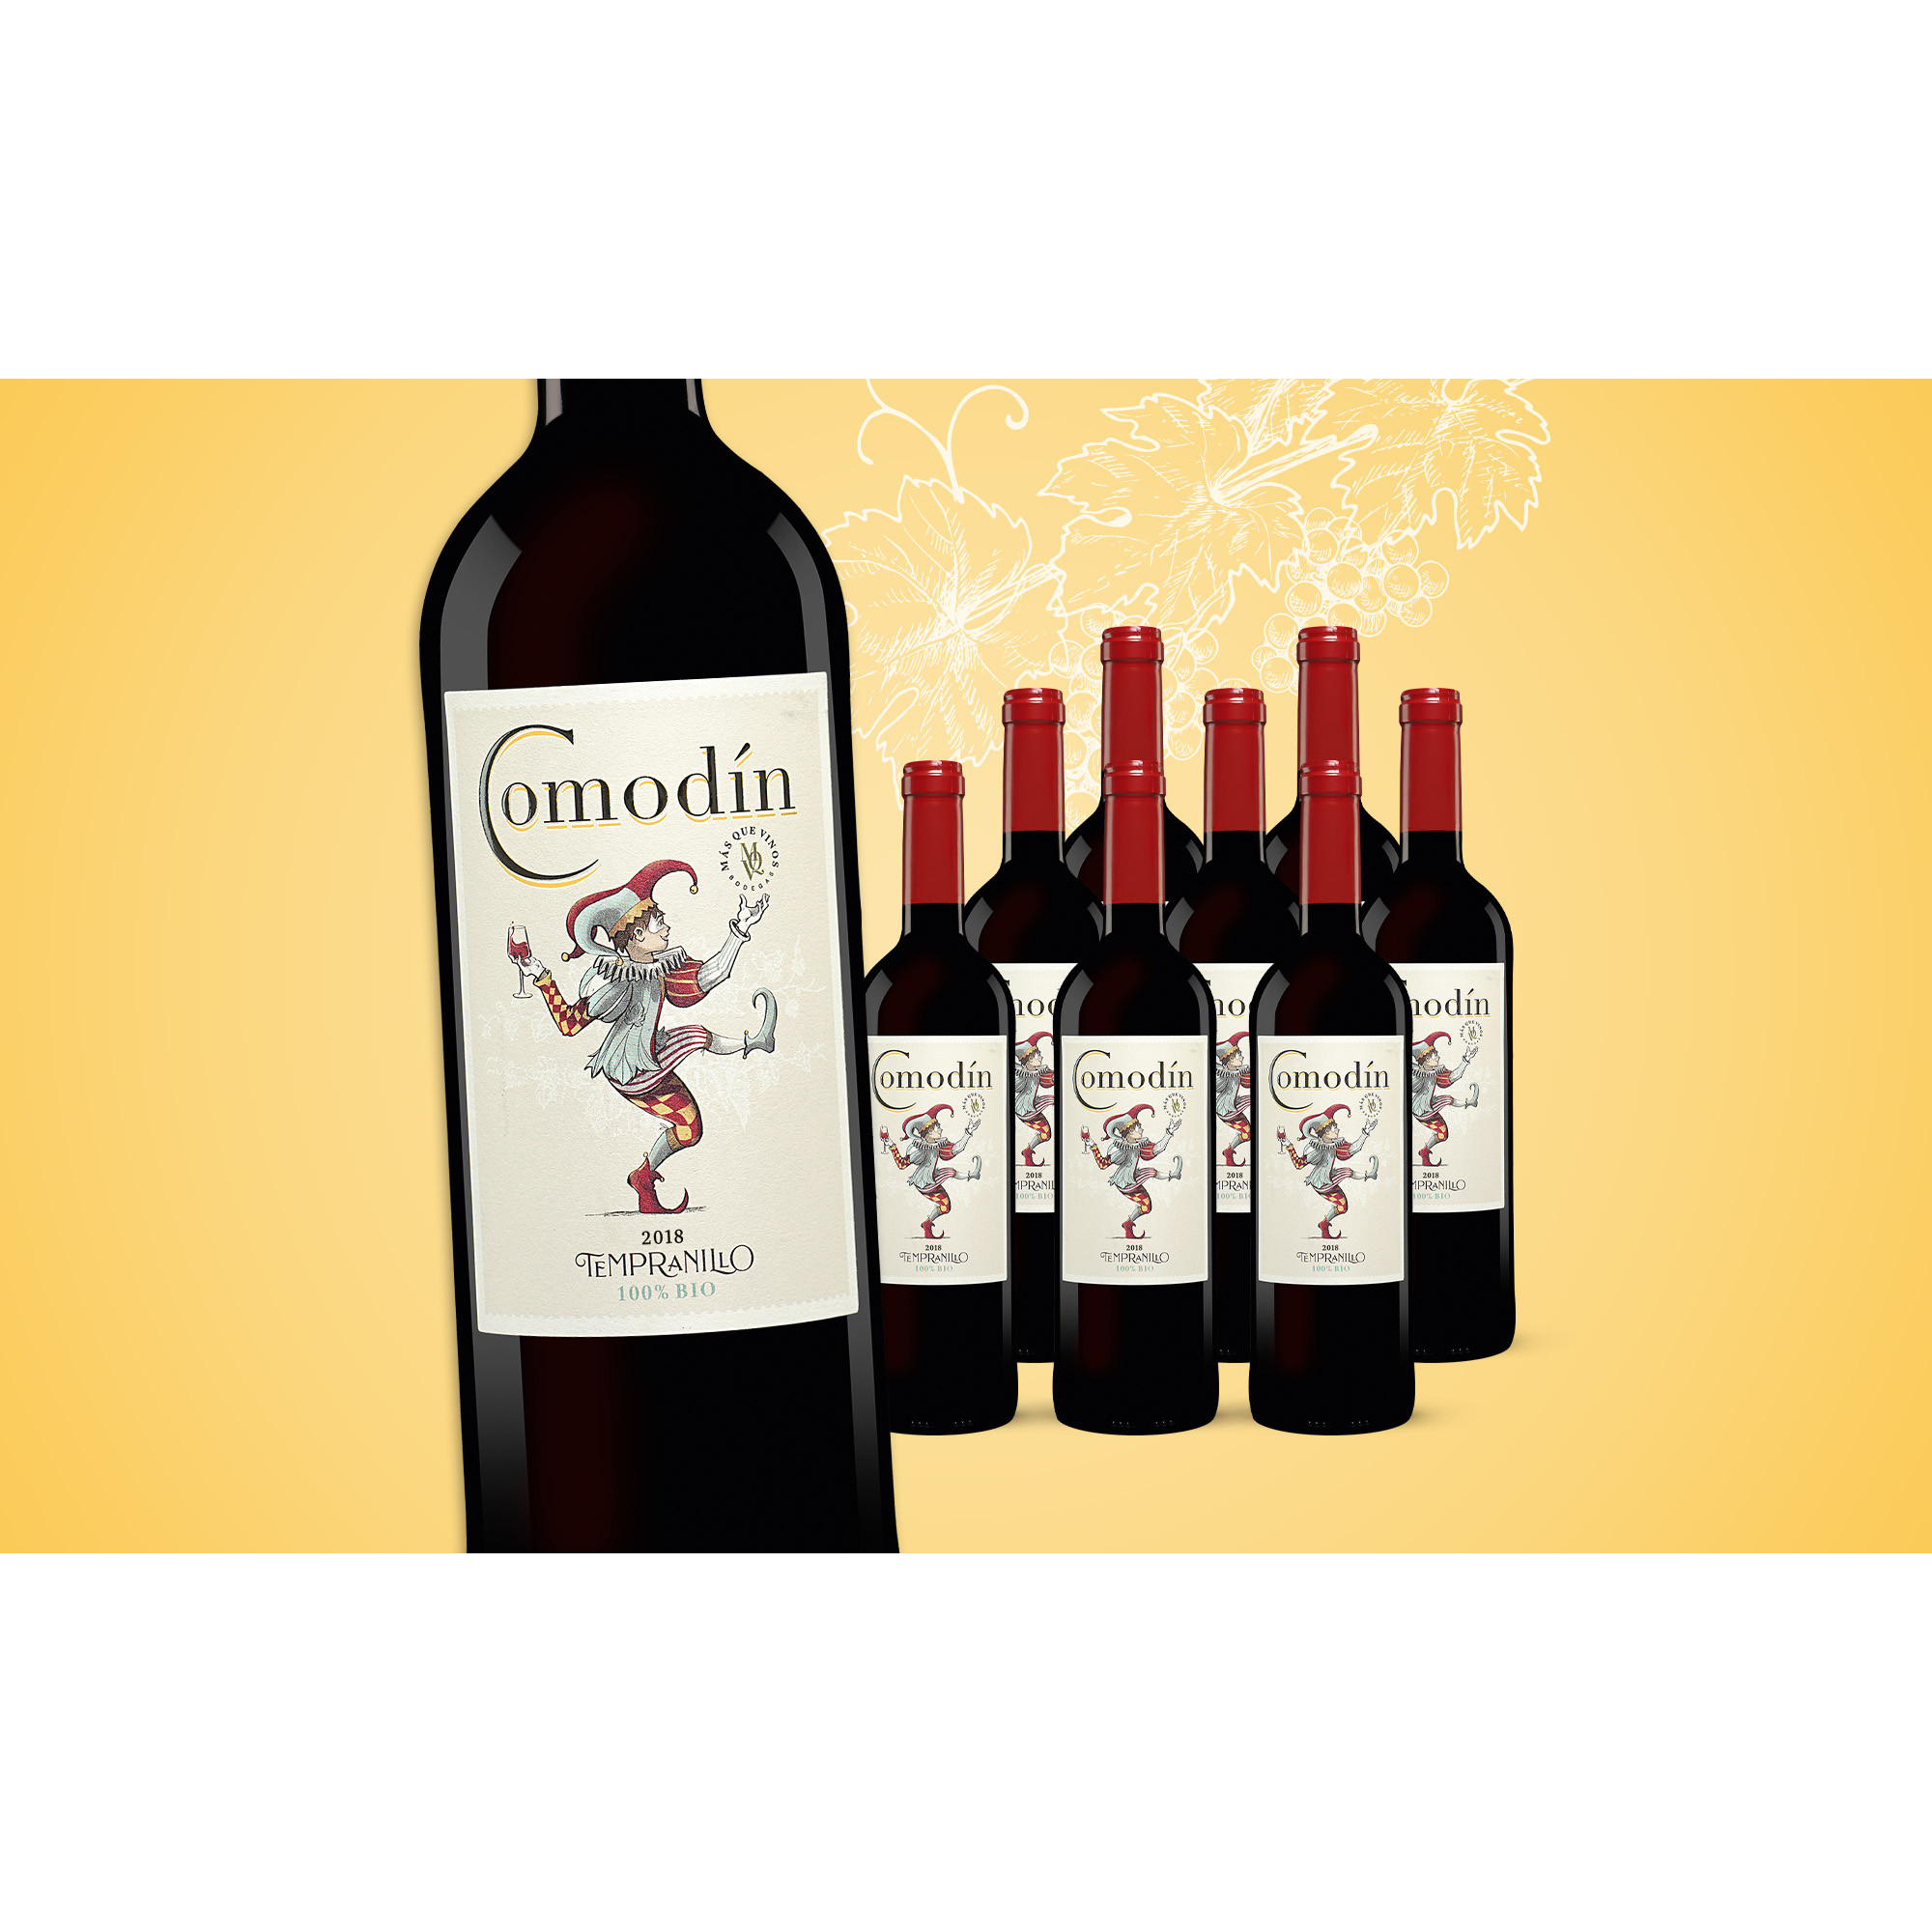 Comodín Cencibel 2018  6.75L Trocken Weinpaket aus Spanien 34302 vinos DE